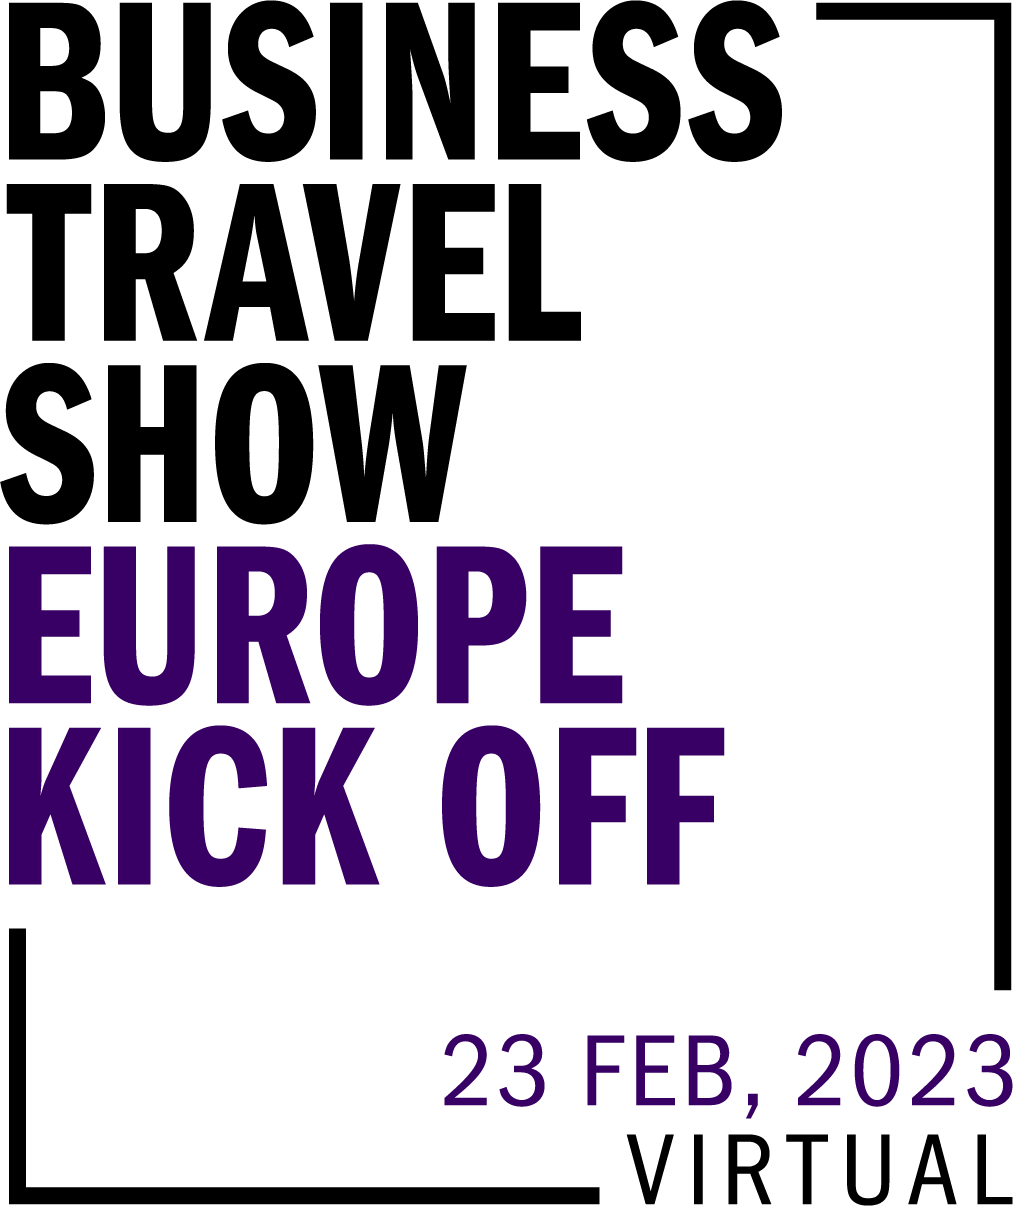  alt='Business Travel Show Europe Kick Off'  title='Business Travel Show Europe Kick Off' 